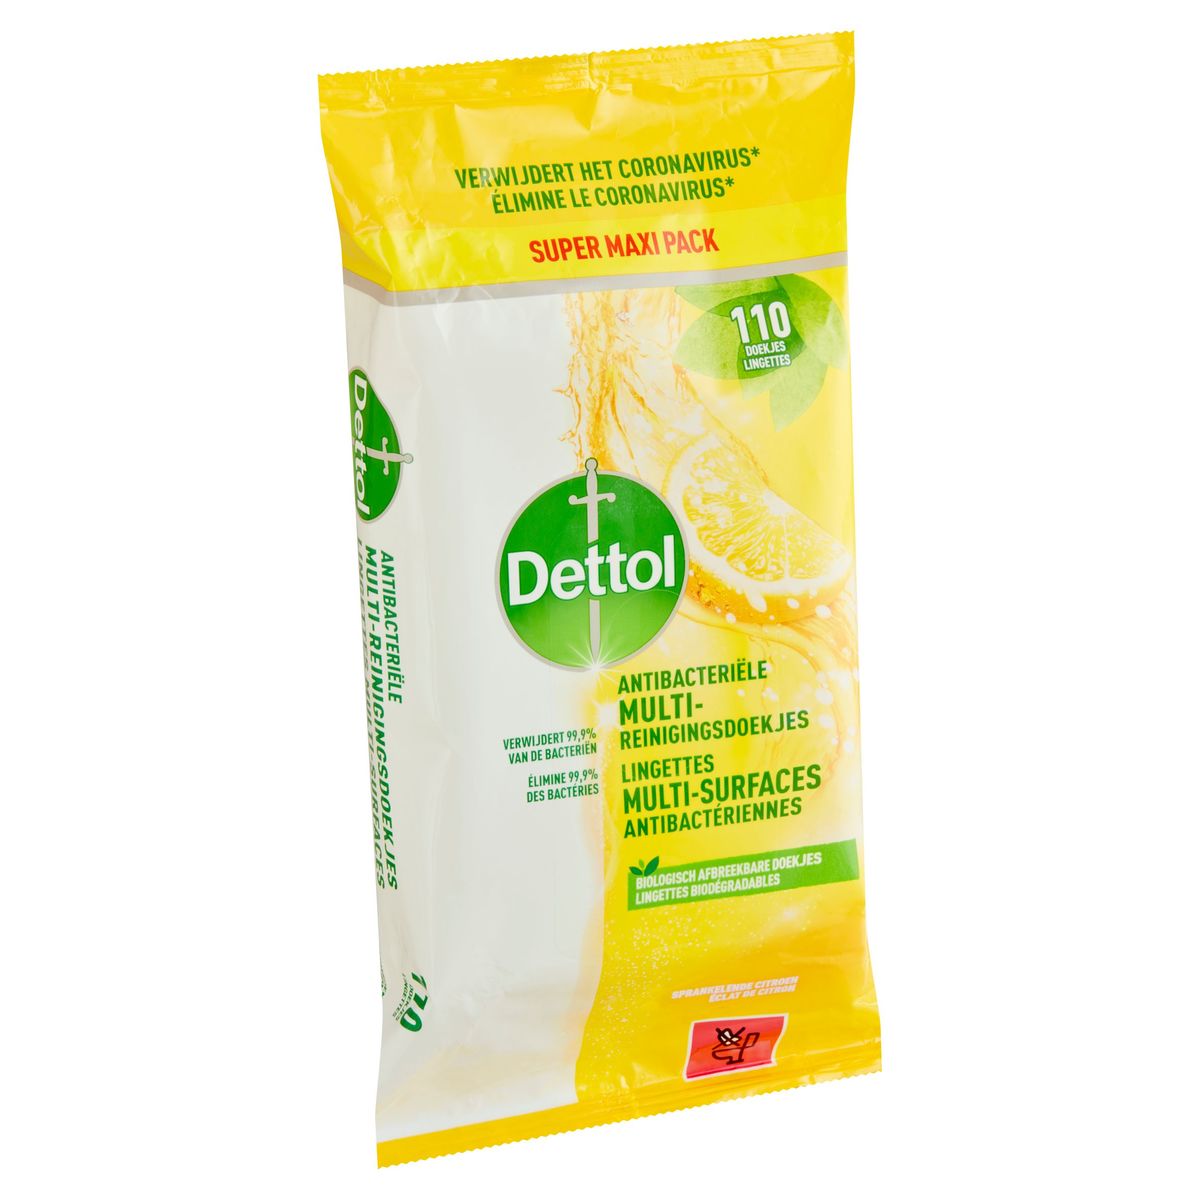 Dettol Antibacteriële Multi-Reinigingsdoekjes Citroen Pack 110 St